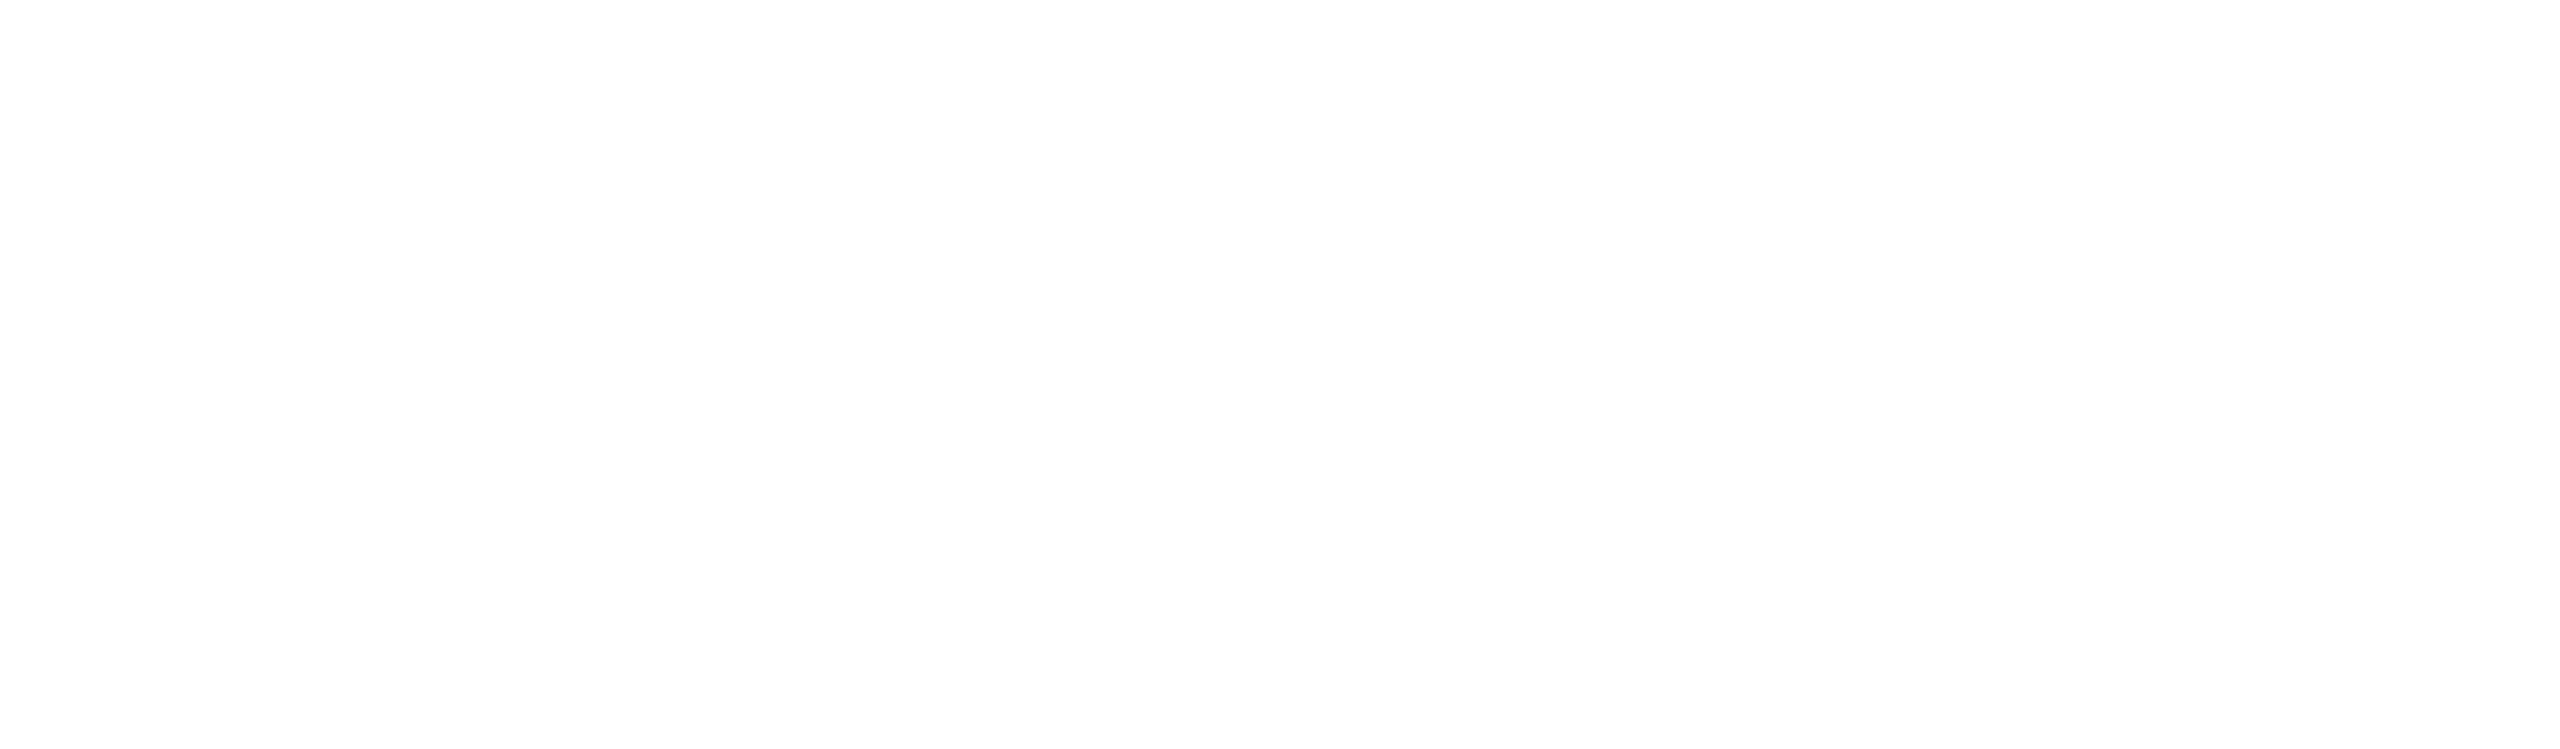 Skyvan Service